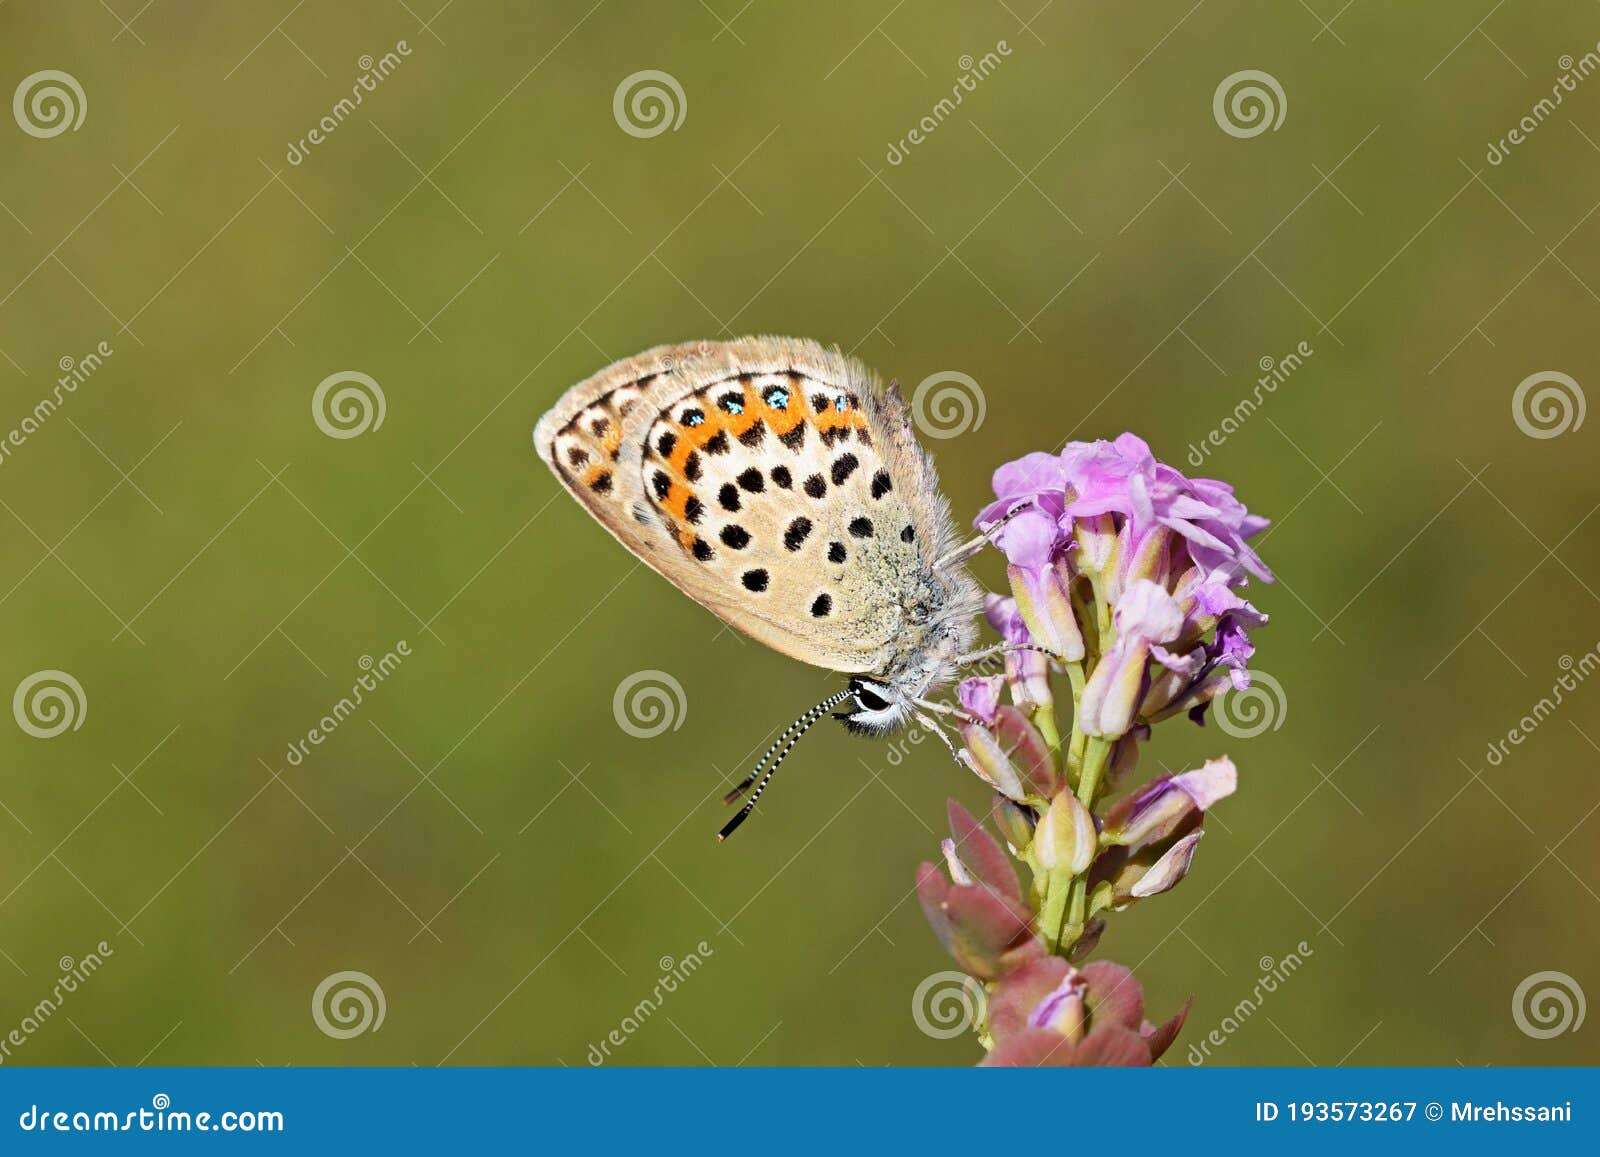 female plebejus idas , the idas blue or northern blue butterfly on flower